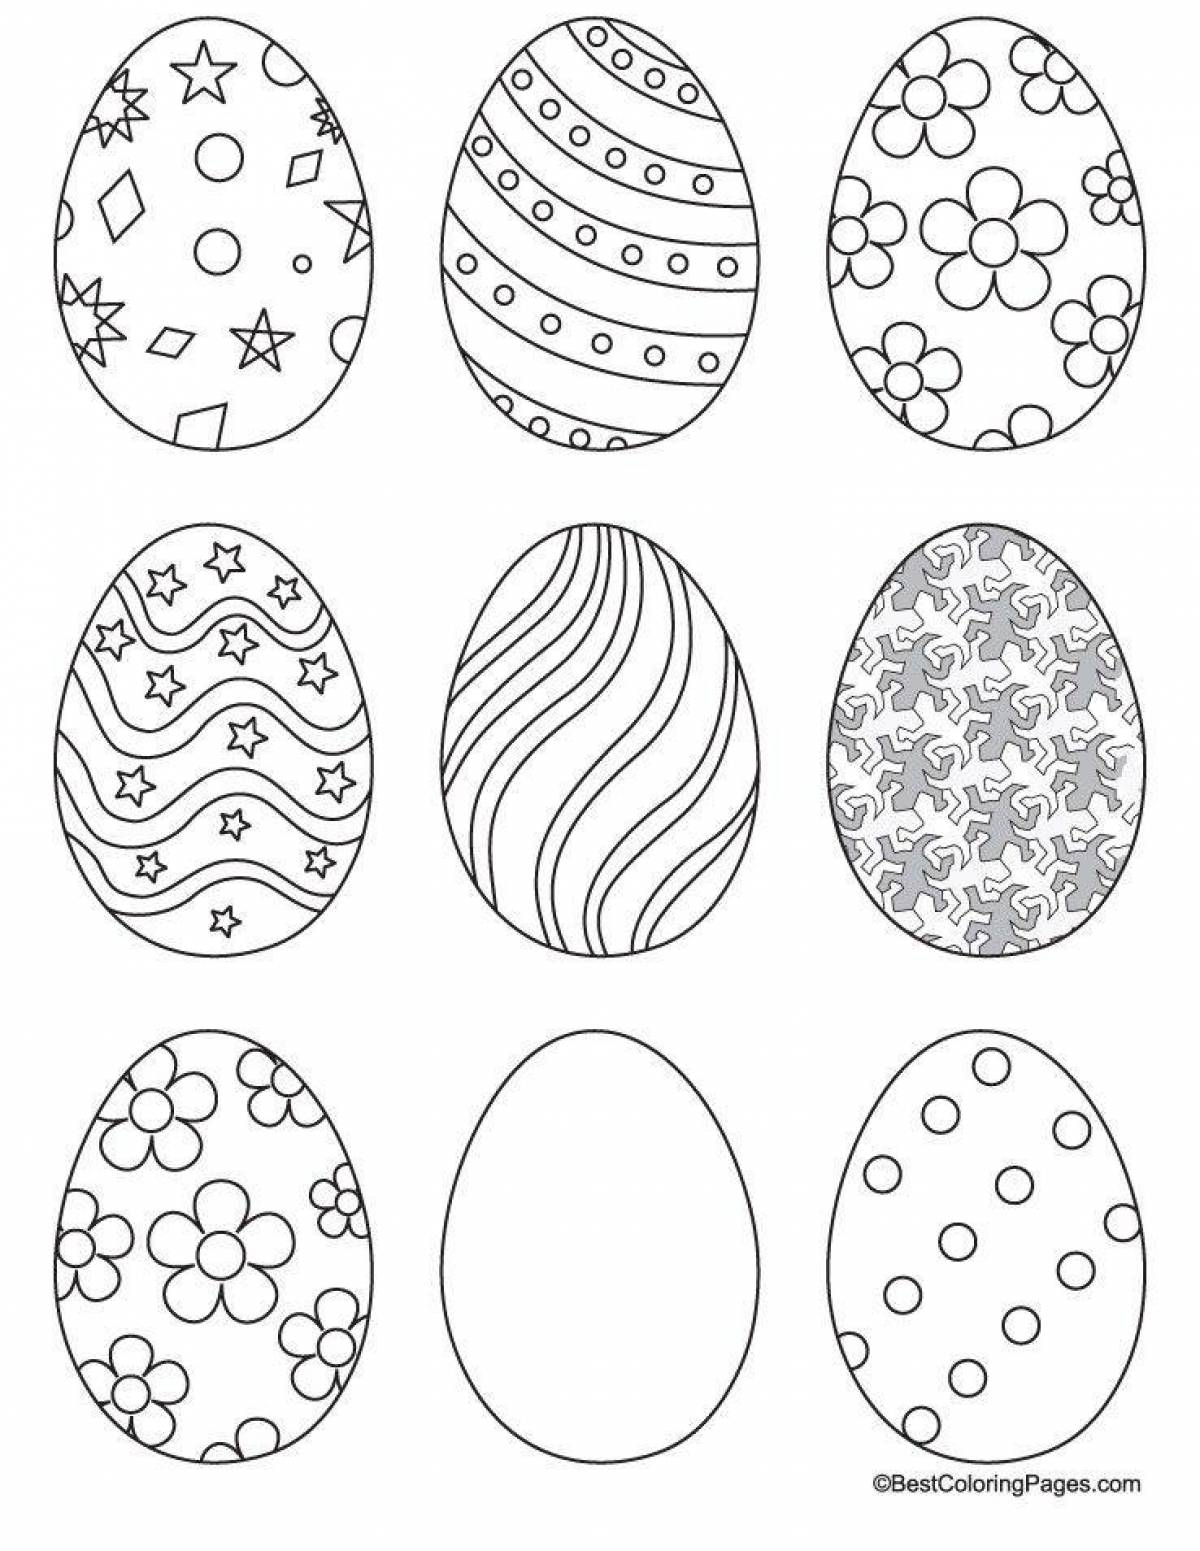 Fun egg coloring